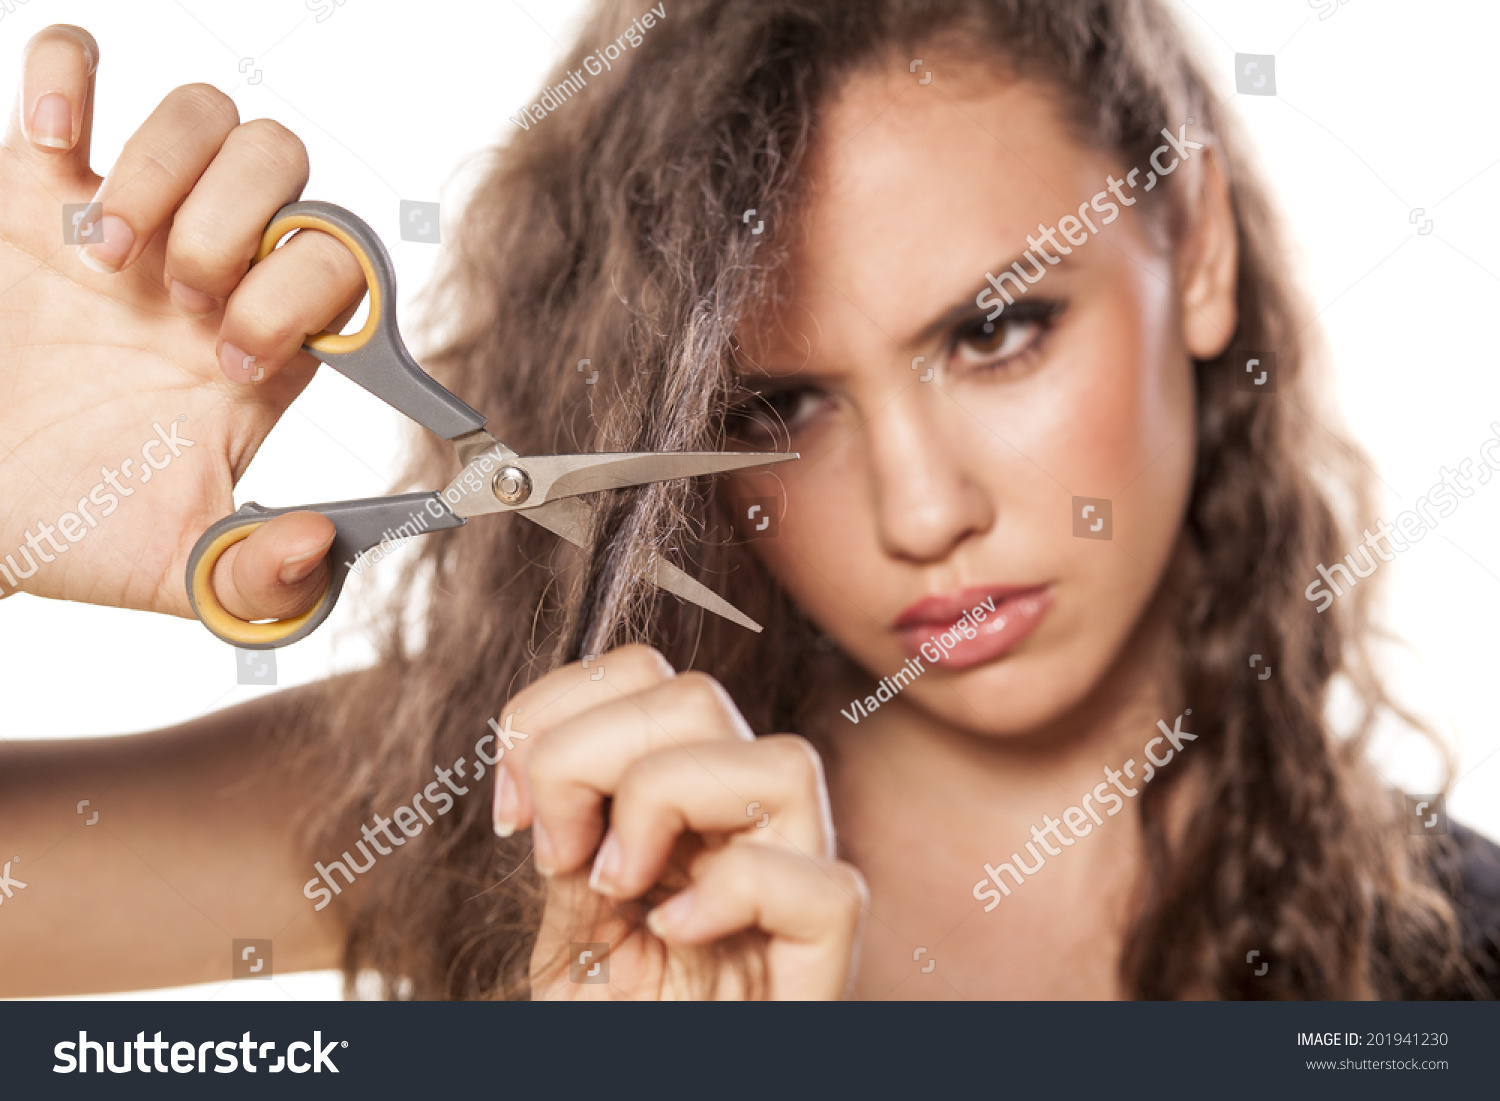 Nervous Girl Cuts Her Hair Scissors Stock Photo 201941230